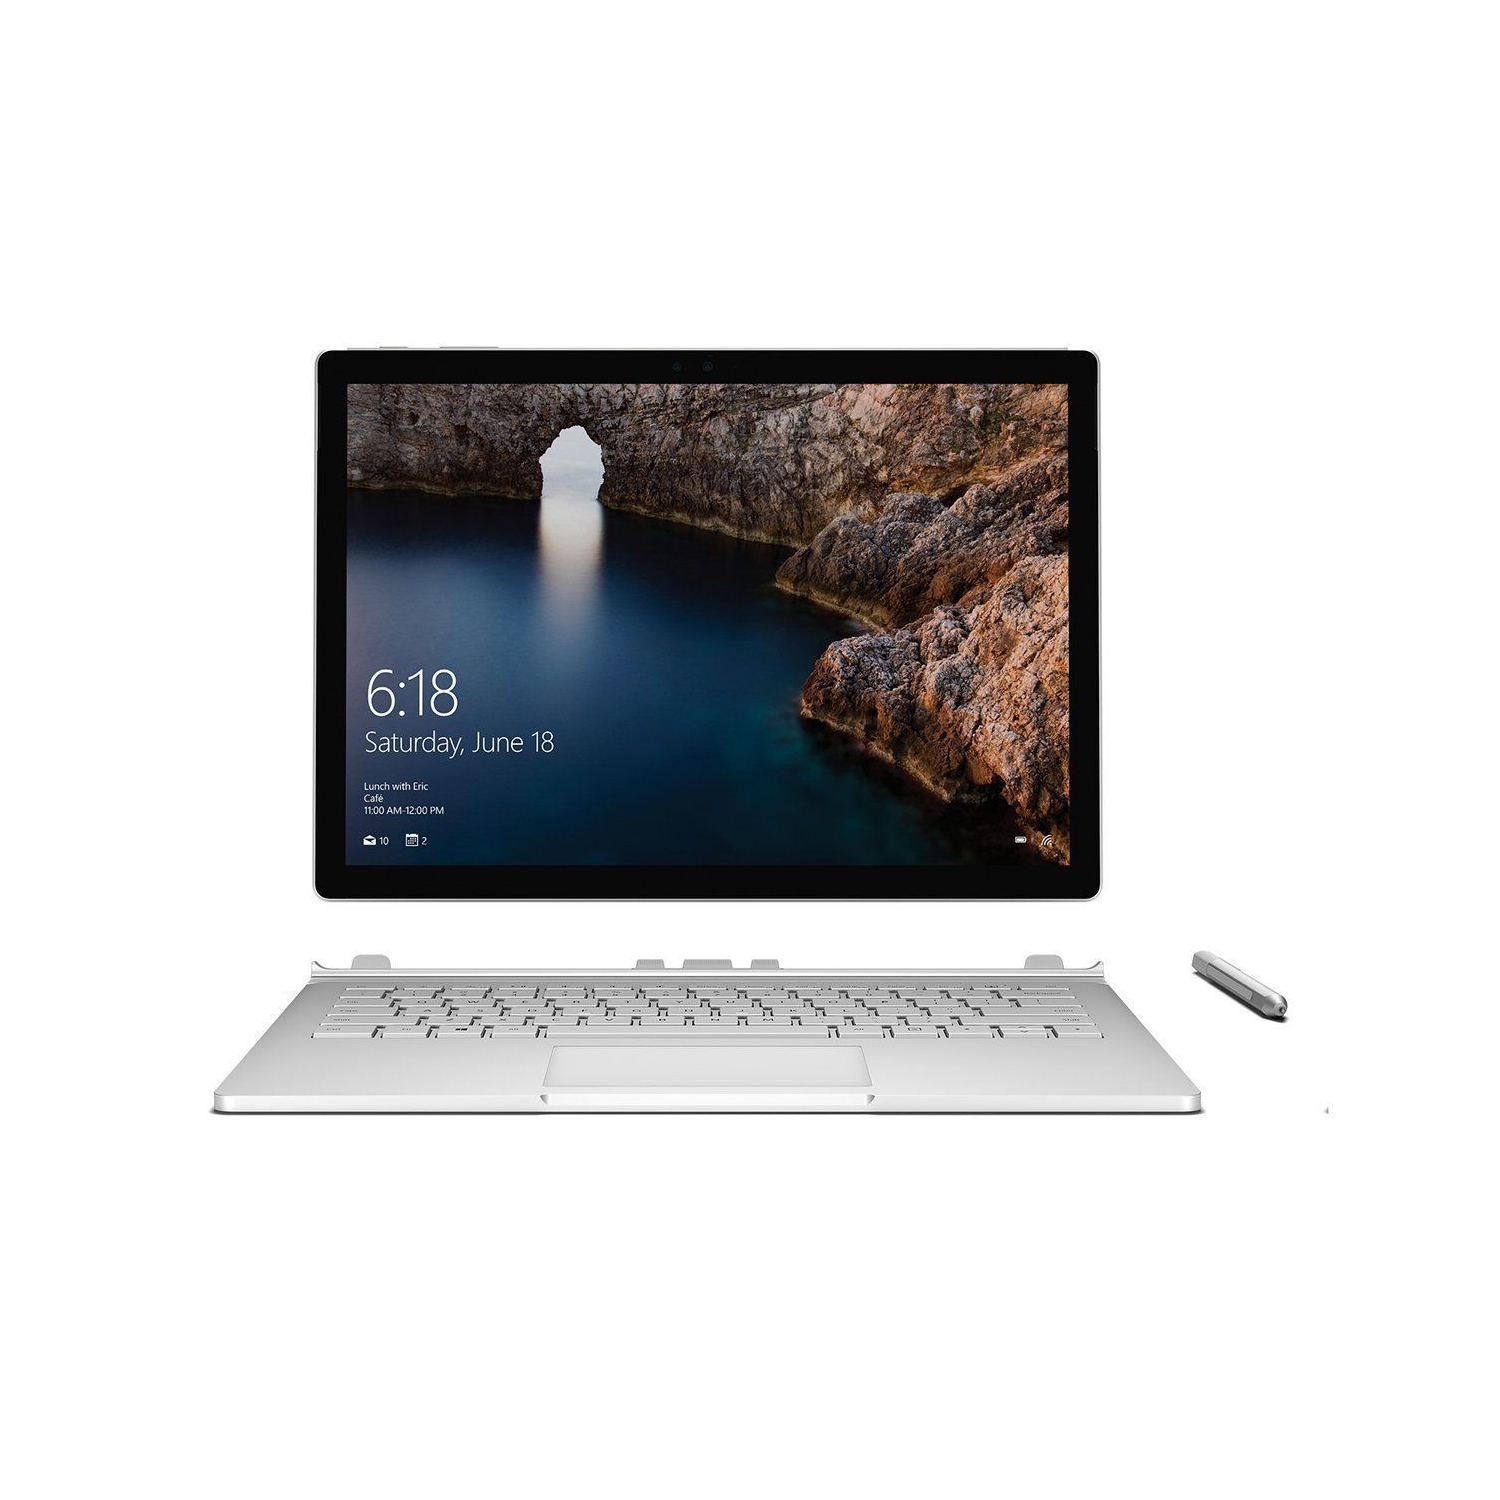 Microsoft Surface Book 13.5" 2-in-1 Intel i5 8GB 256GB NVIDIA GeForce graphics Windows 10 Pro No Stylus Refurbished Good